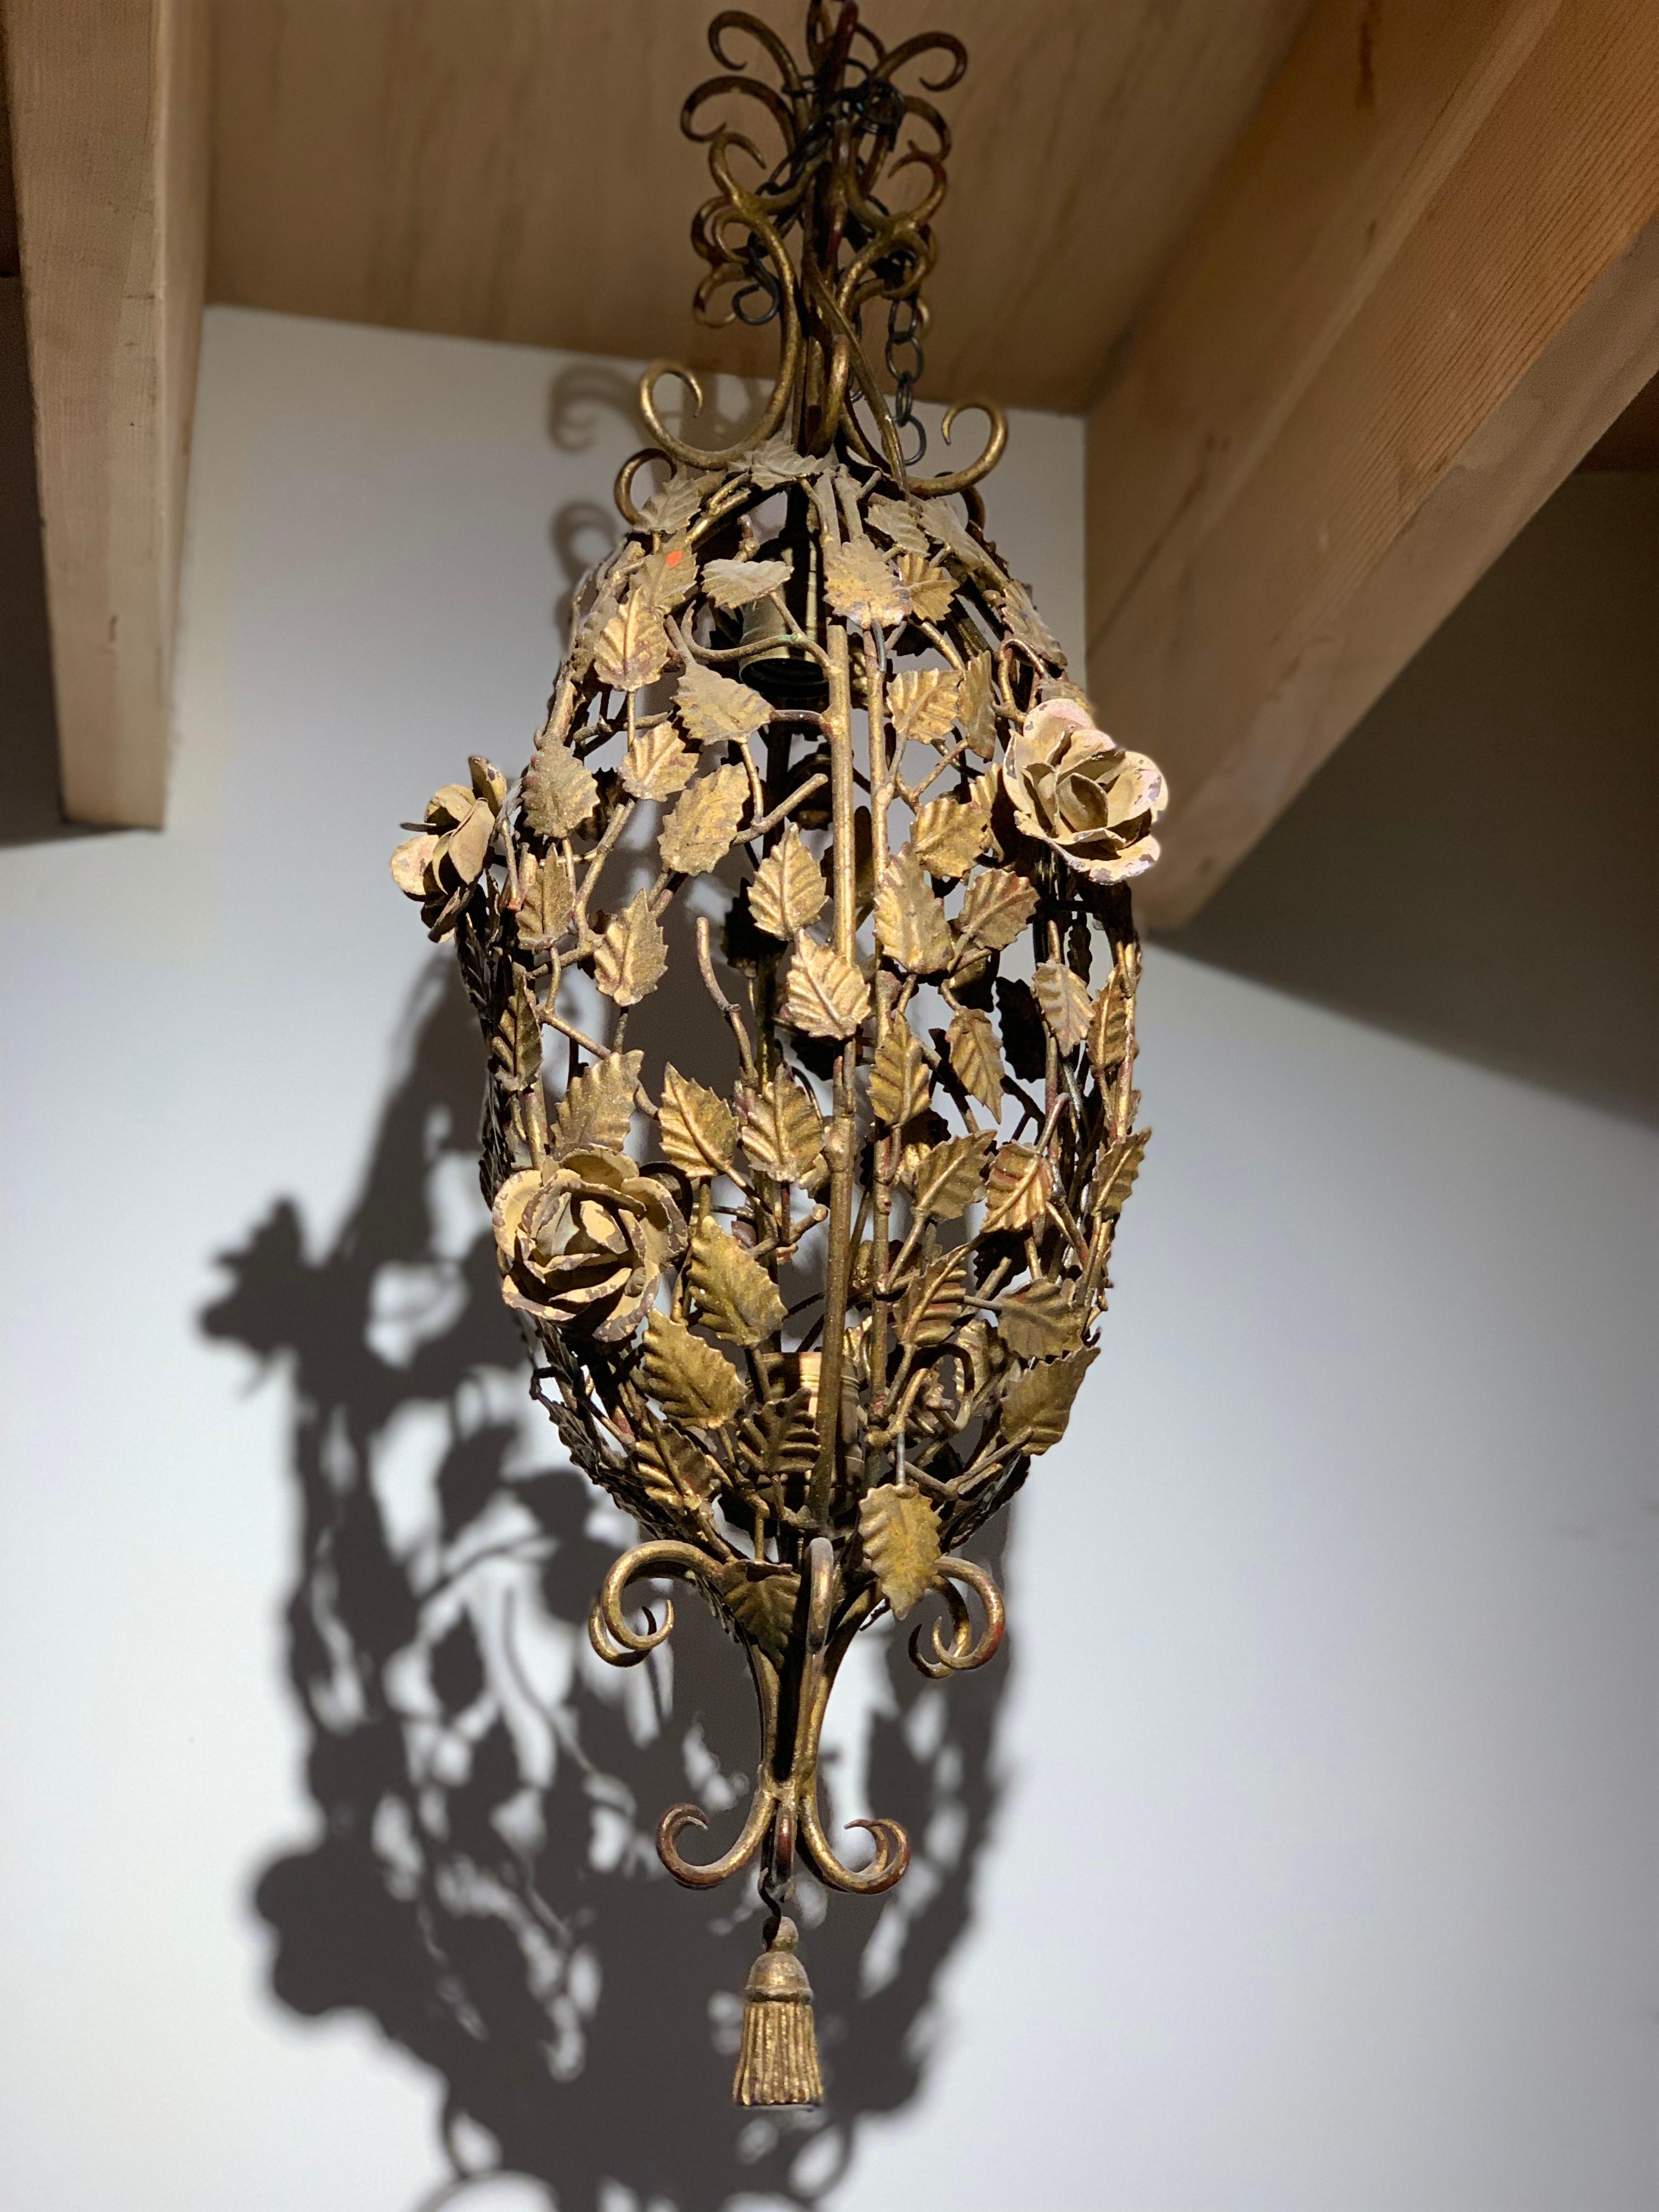 20th Century Rococo Revival Gilt Metal Climbing Rose Lantern Pendant, Trompe L'oeil Tassle